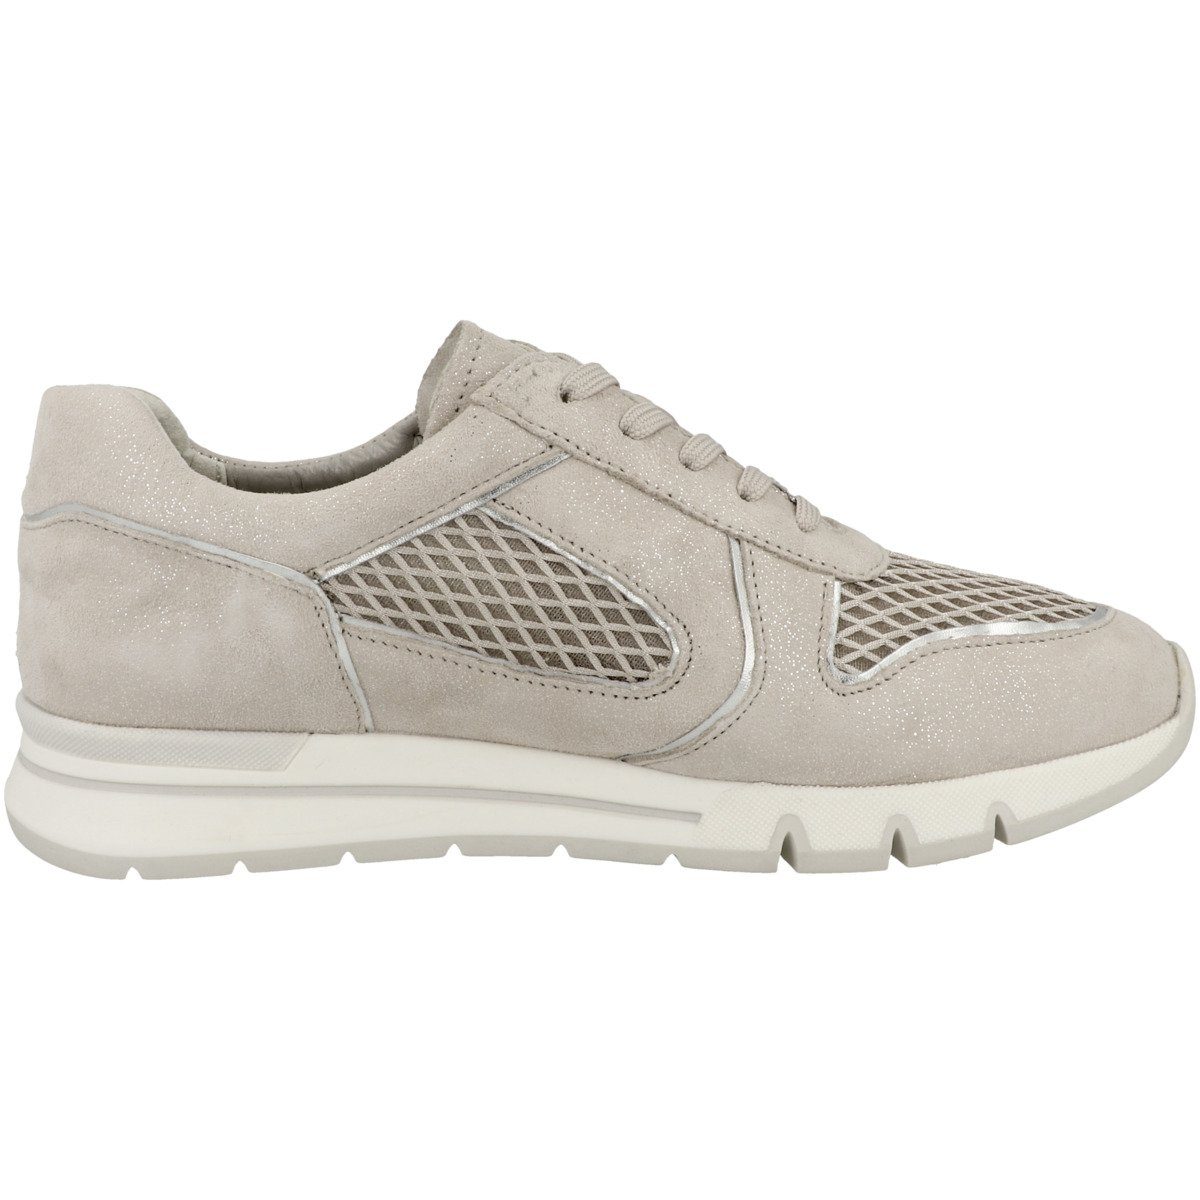 Caprice 9-23706-20 Damen Sneaker grau